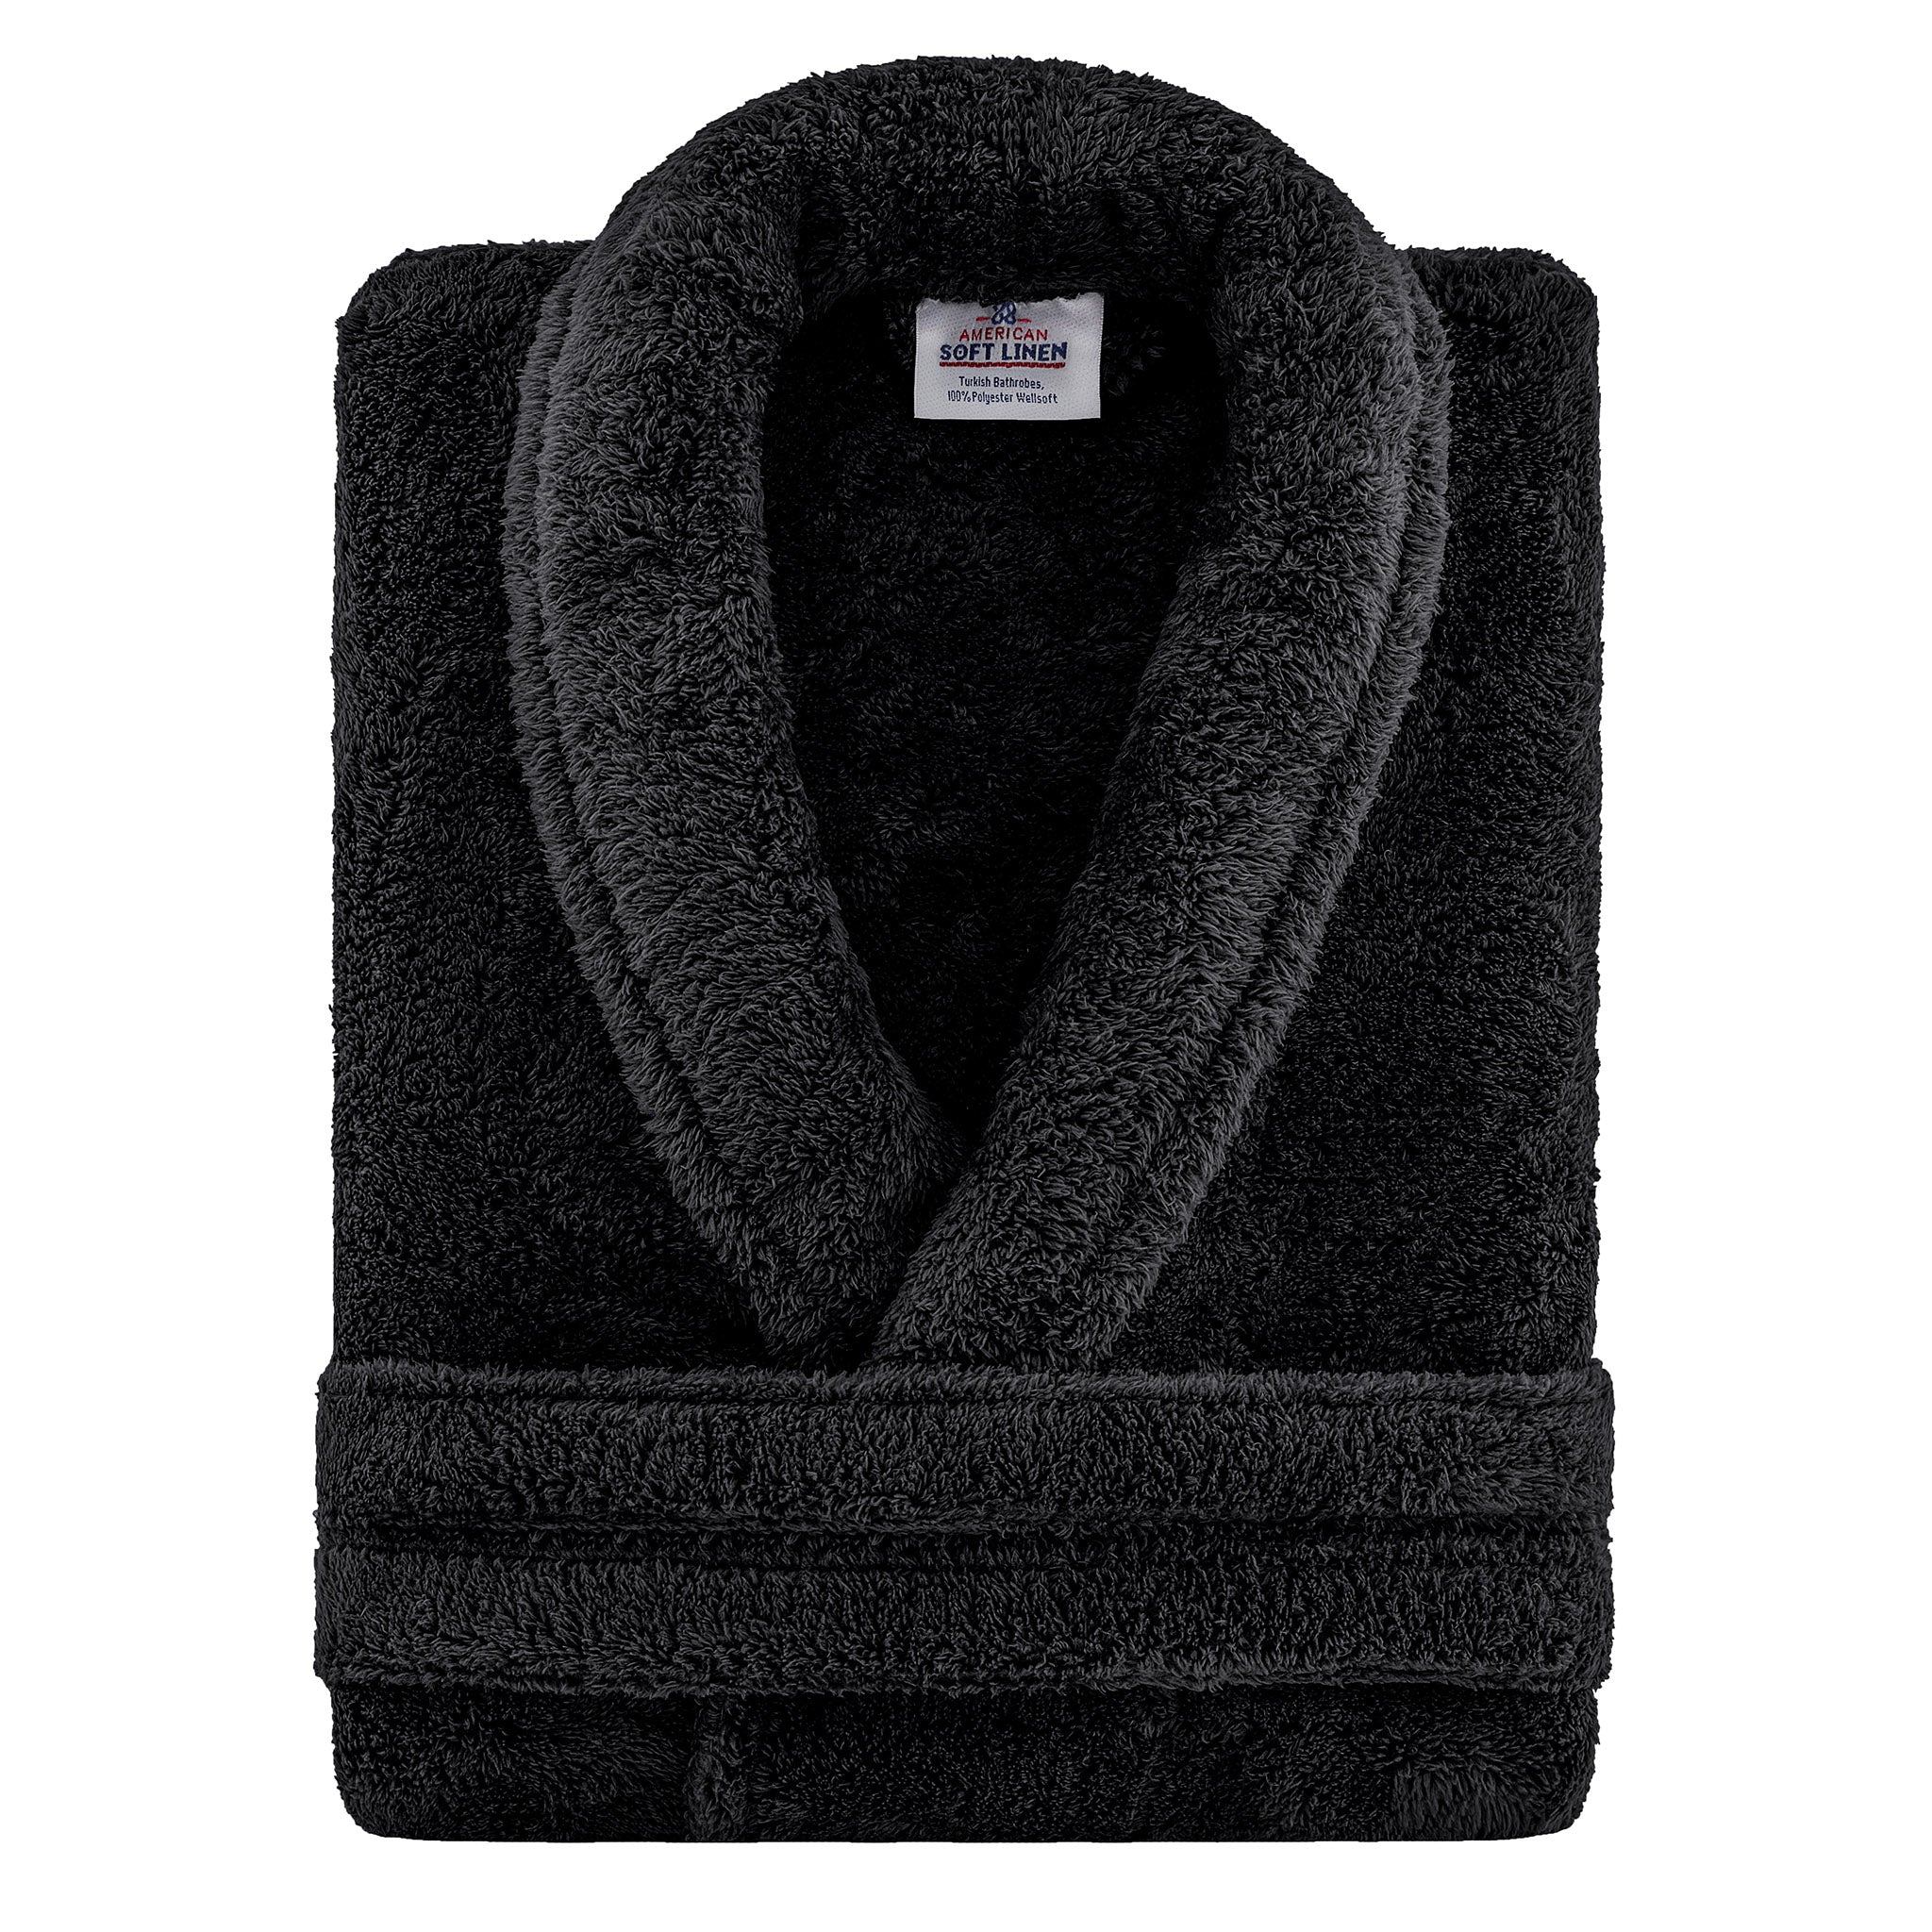 American Soft Linen Super Soft, Absorbent and Fluffy, Unisex Fleece Bathrobe S-M-black-3